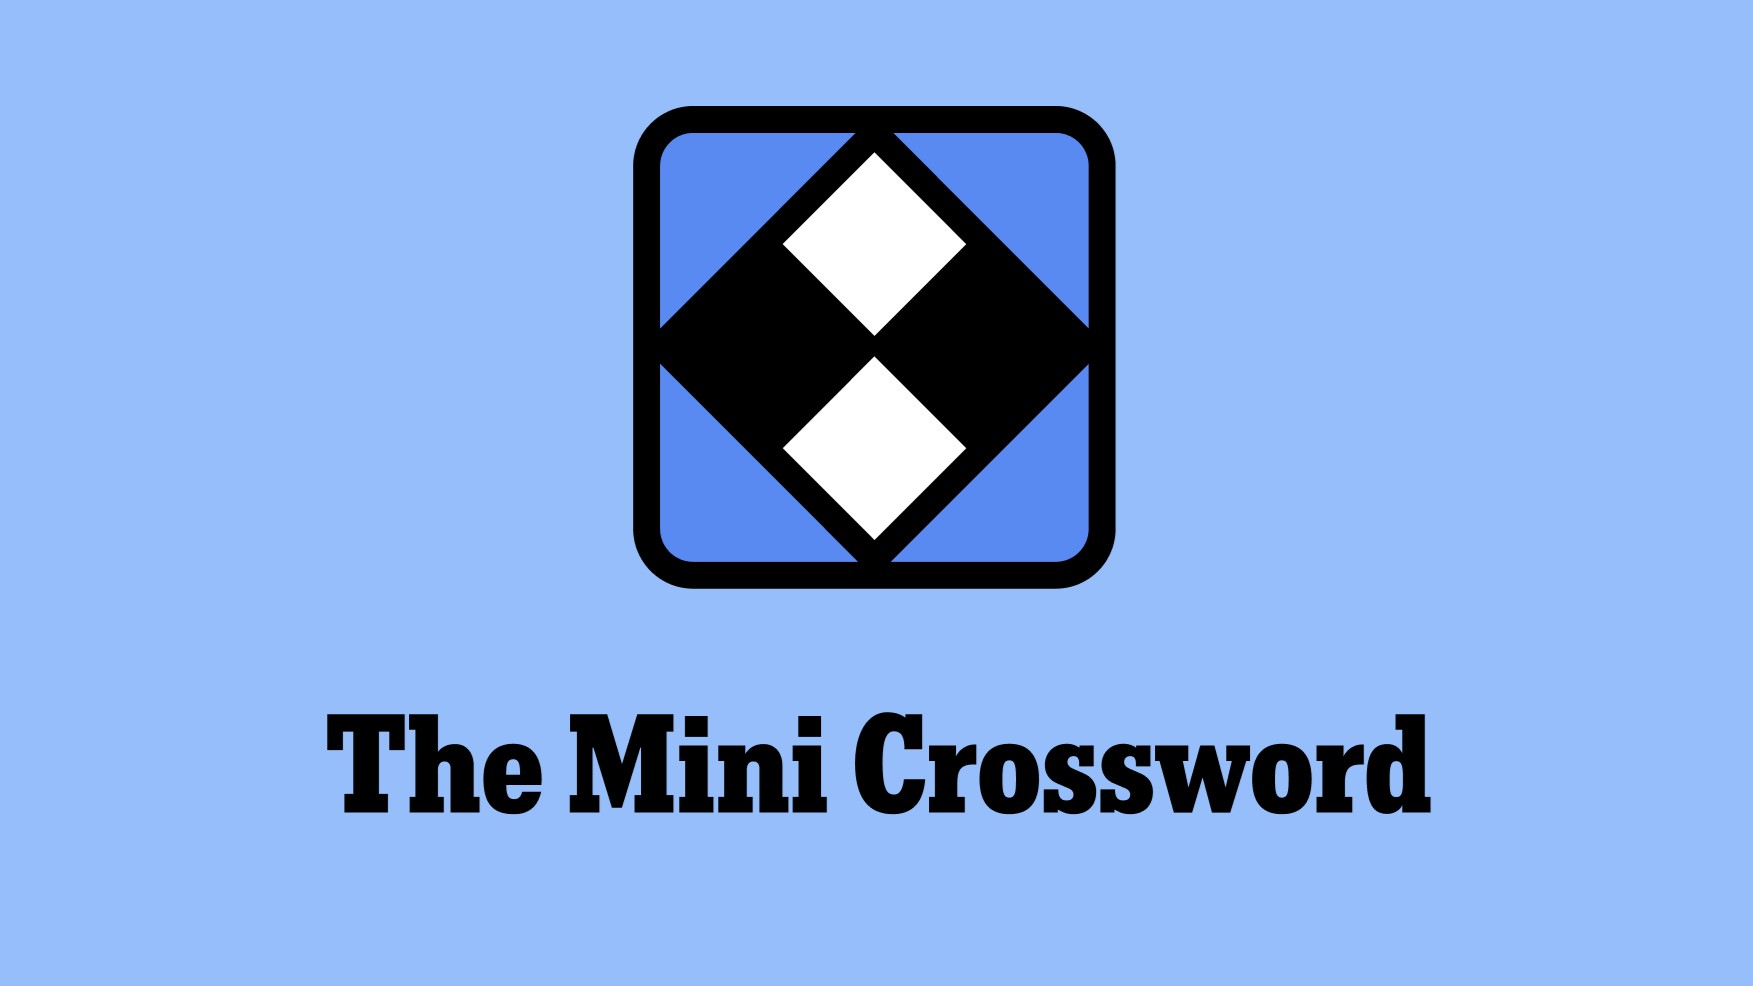 NYT O logotipo das Mini palavras cruzadas.